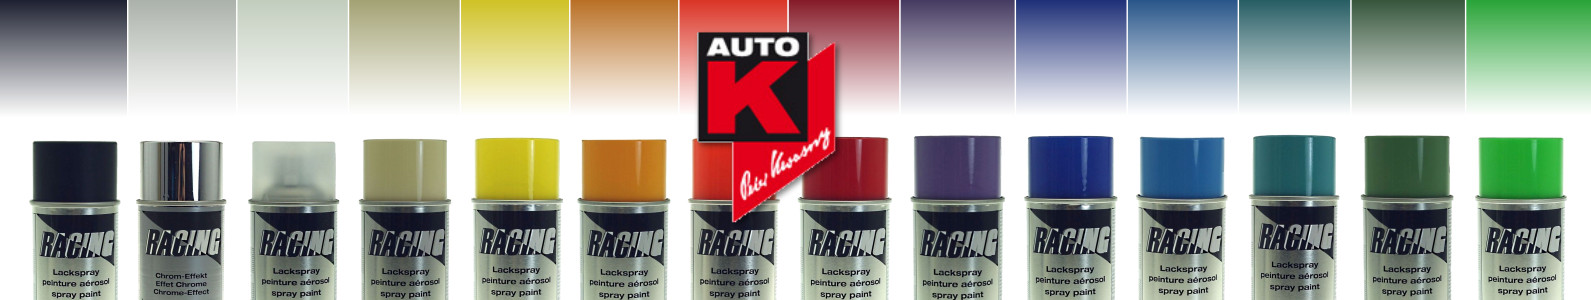 Auto K paint